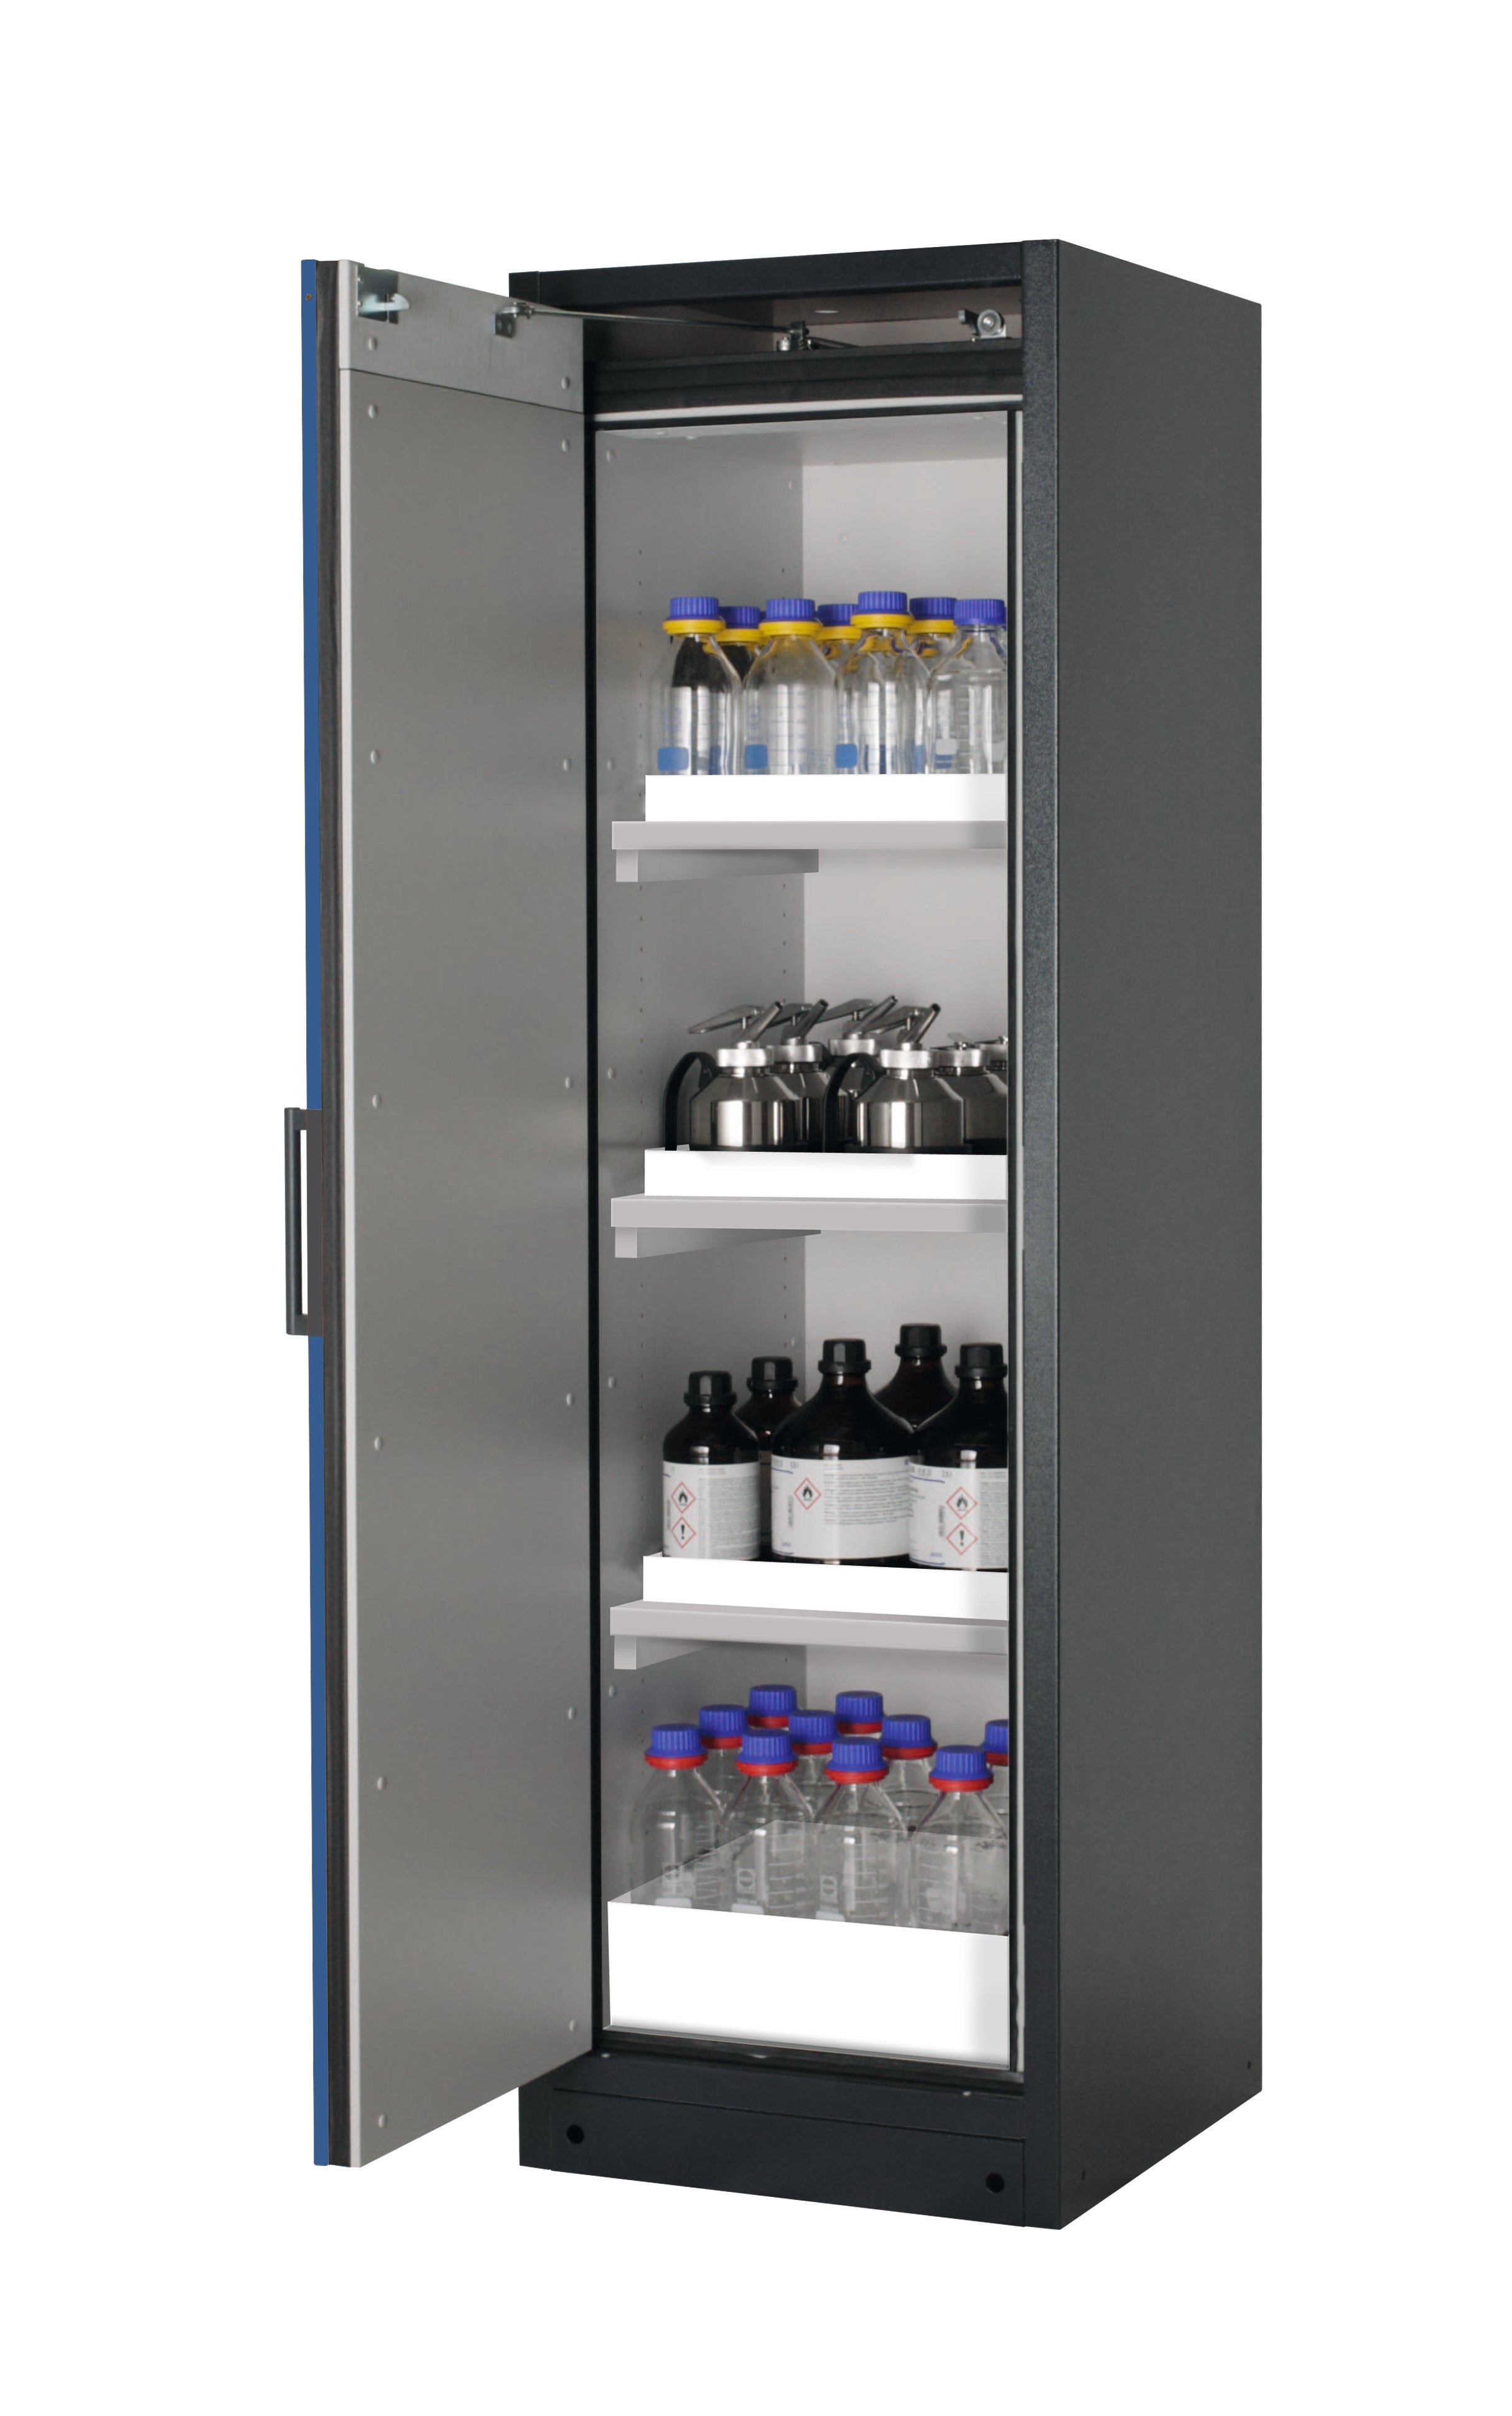 Type 90 safety storage cabinet Q-PEGASUS-90 model Q90.195.060.WDAC in gentian blue RAL 5010 with 3x tray shelf (standard) (polypropylene),